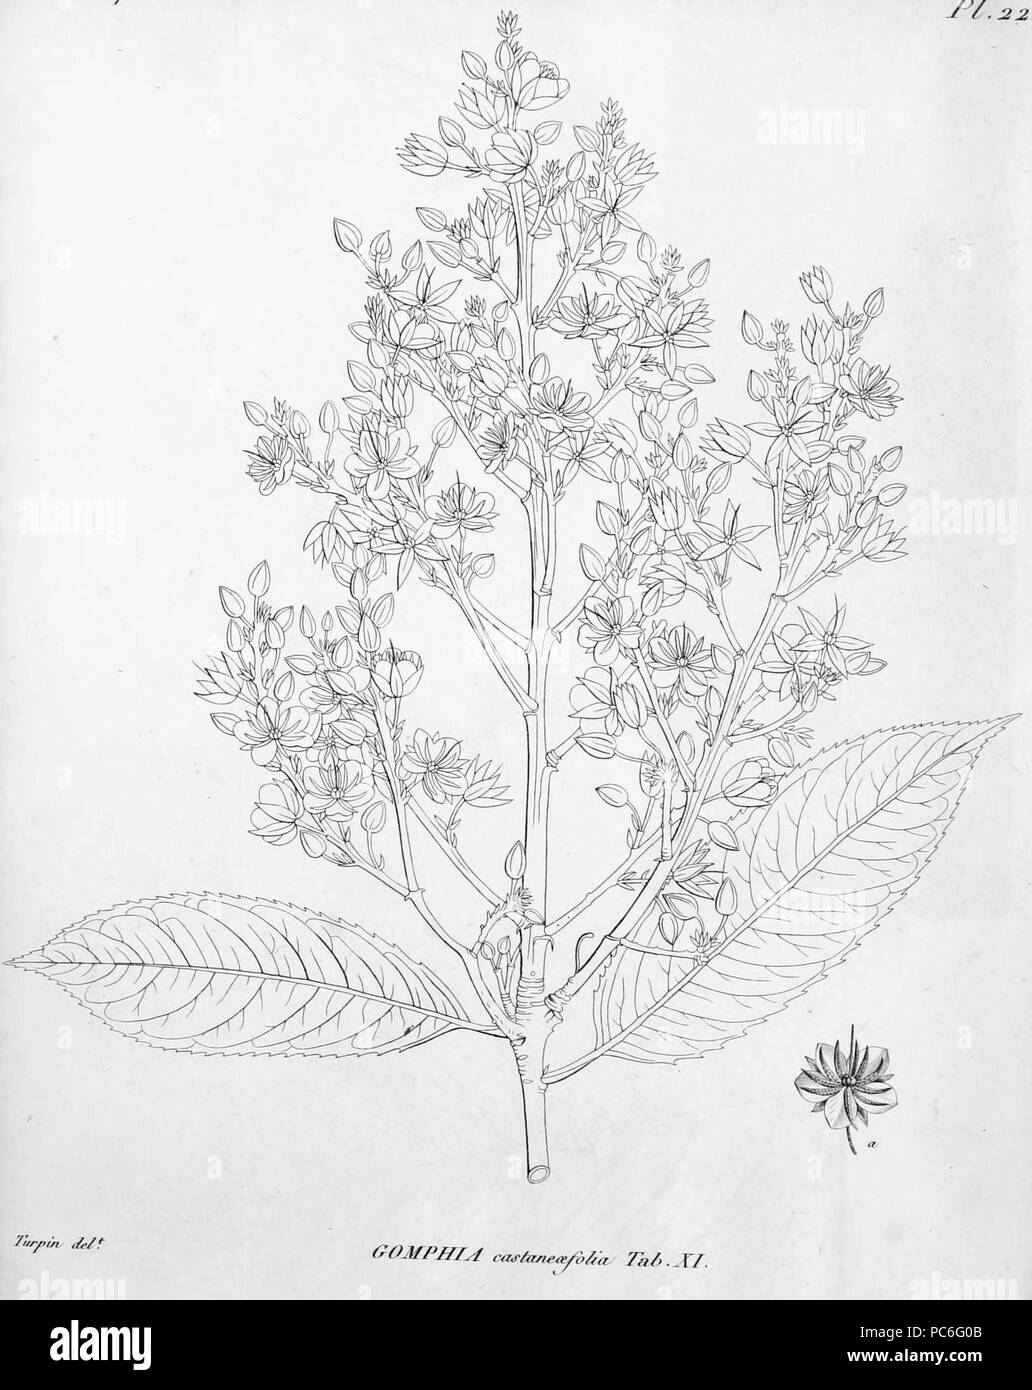 39 Gomphia castaneaefolia De Candolle 1811 t11 Stock Photo